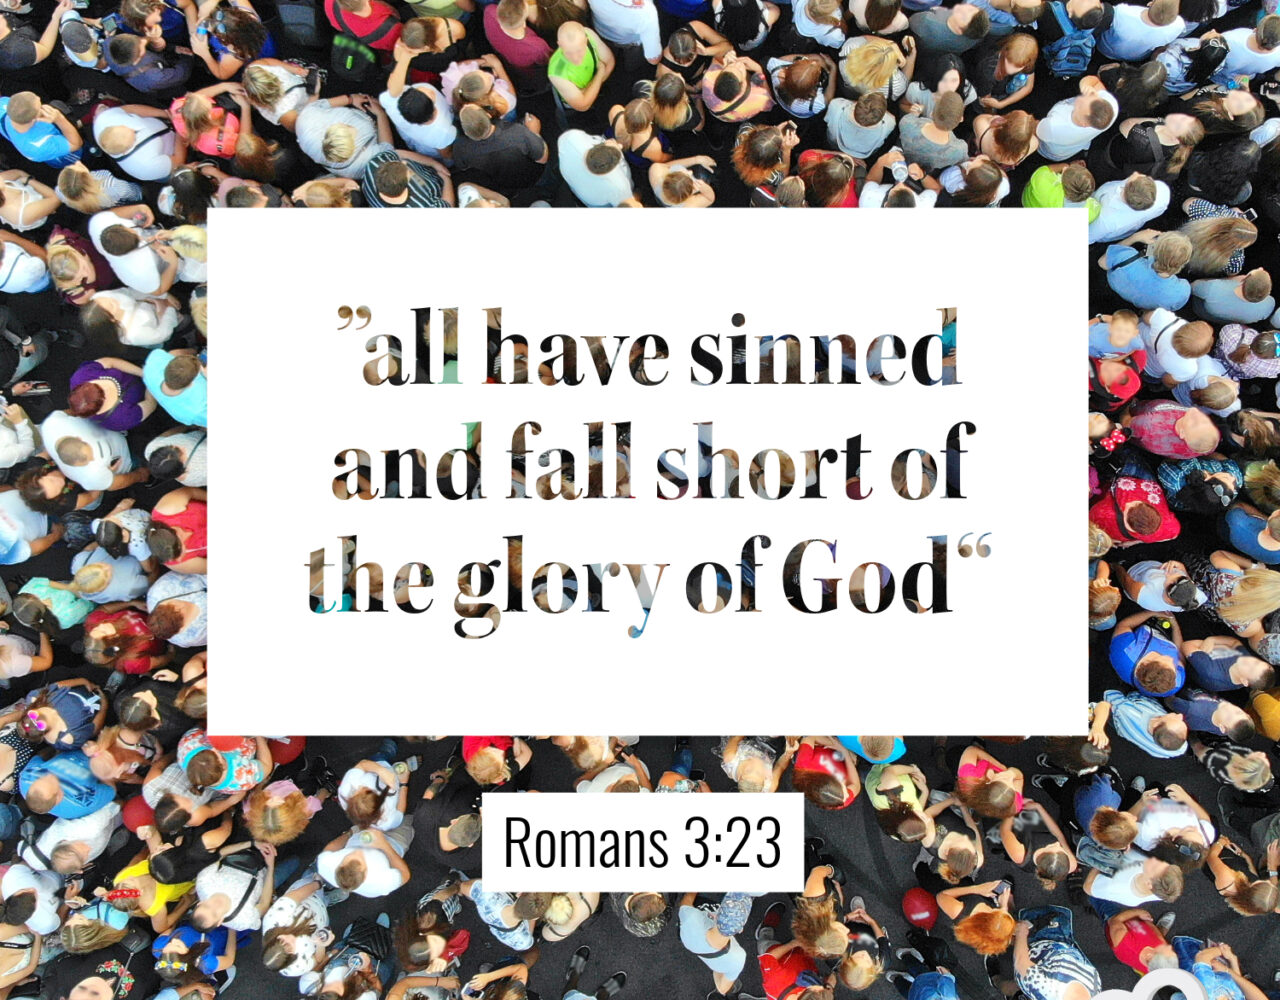 ‭‭Today’s Passage: ‭‭‭‭‭‭‭‭‭‭‭‭‭‭‭‭‭‭‭‭‭‭‭‭‭‭‭‭‭‭‭‭‭‭‭‭‭‭‭‭Romans‬ ‭3‬:‭23‬ ‭NRSV‬‬